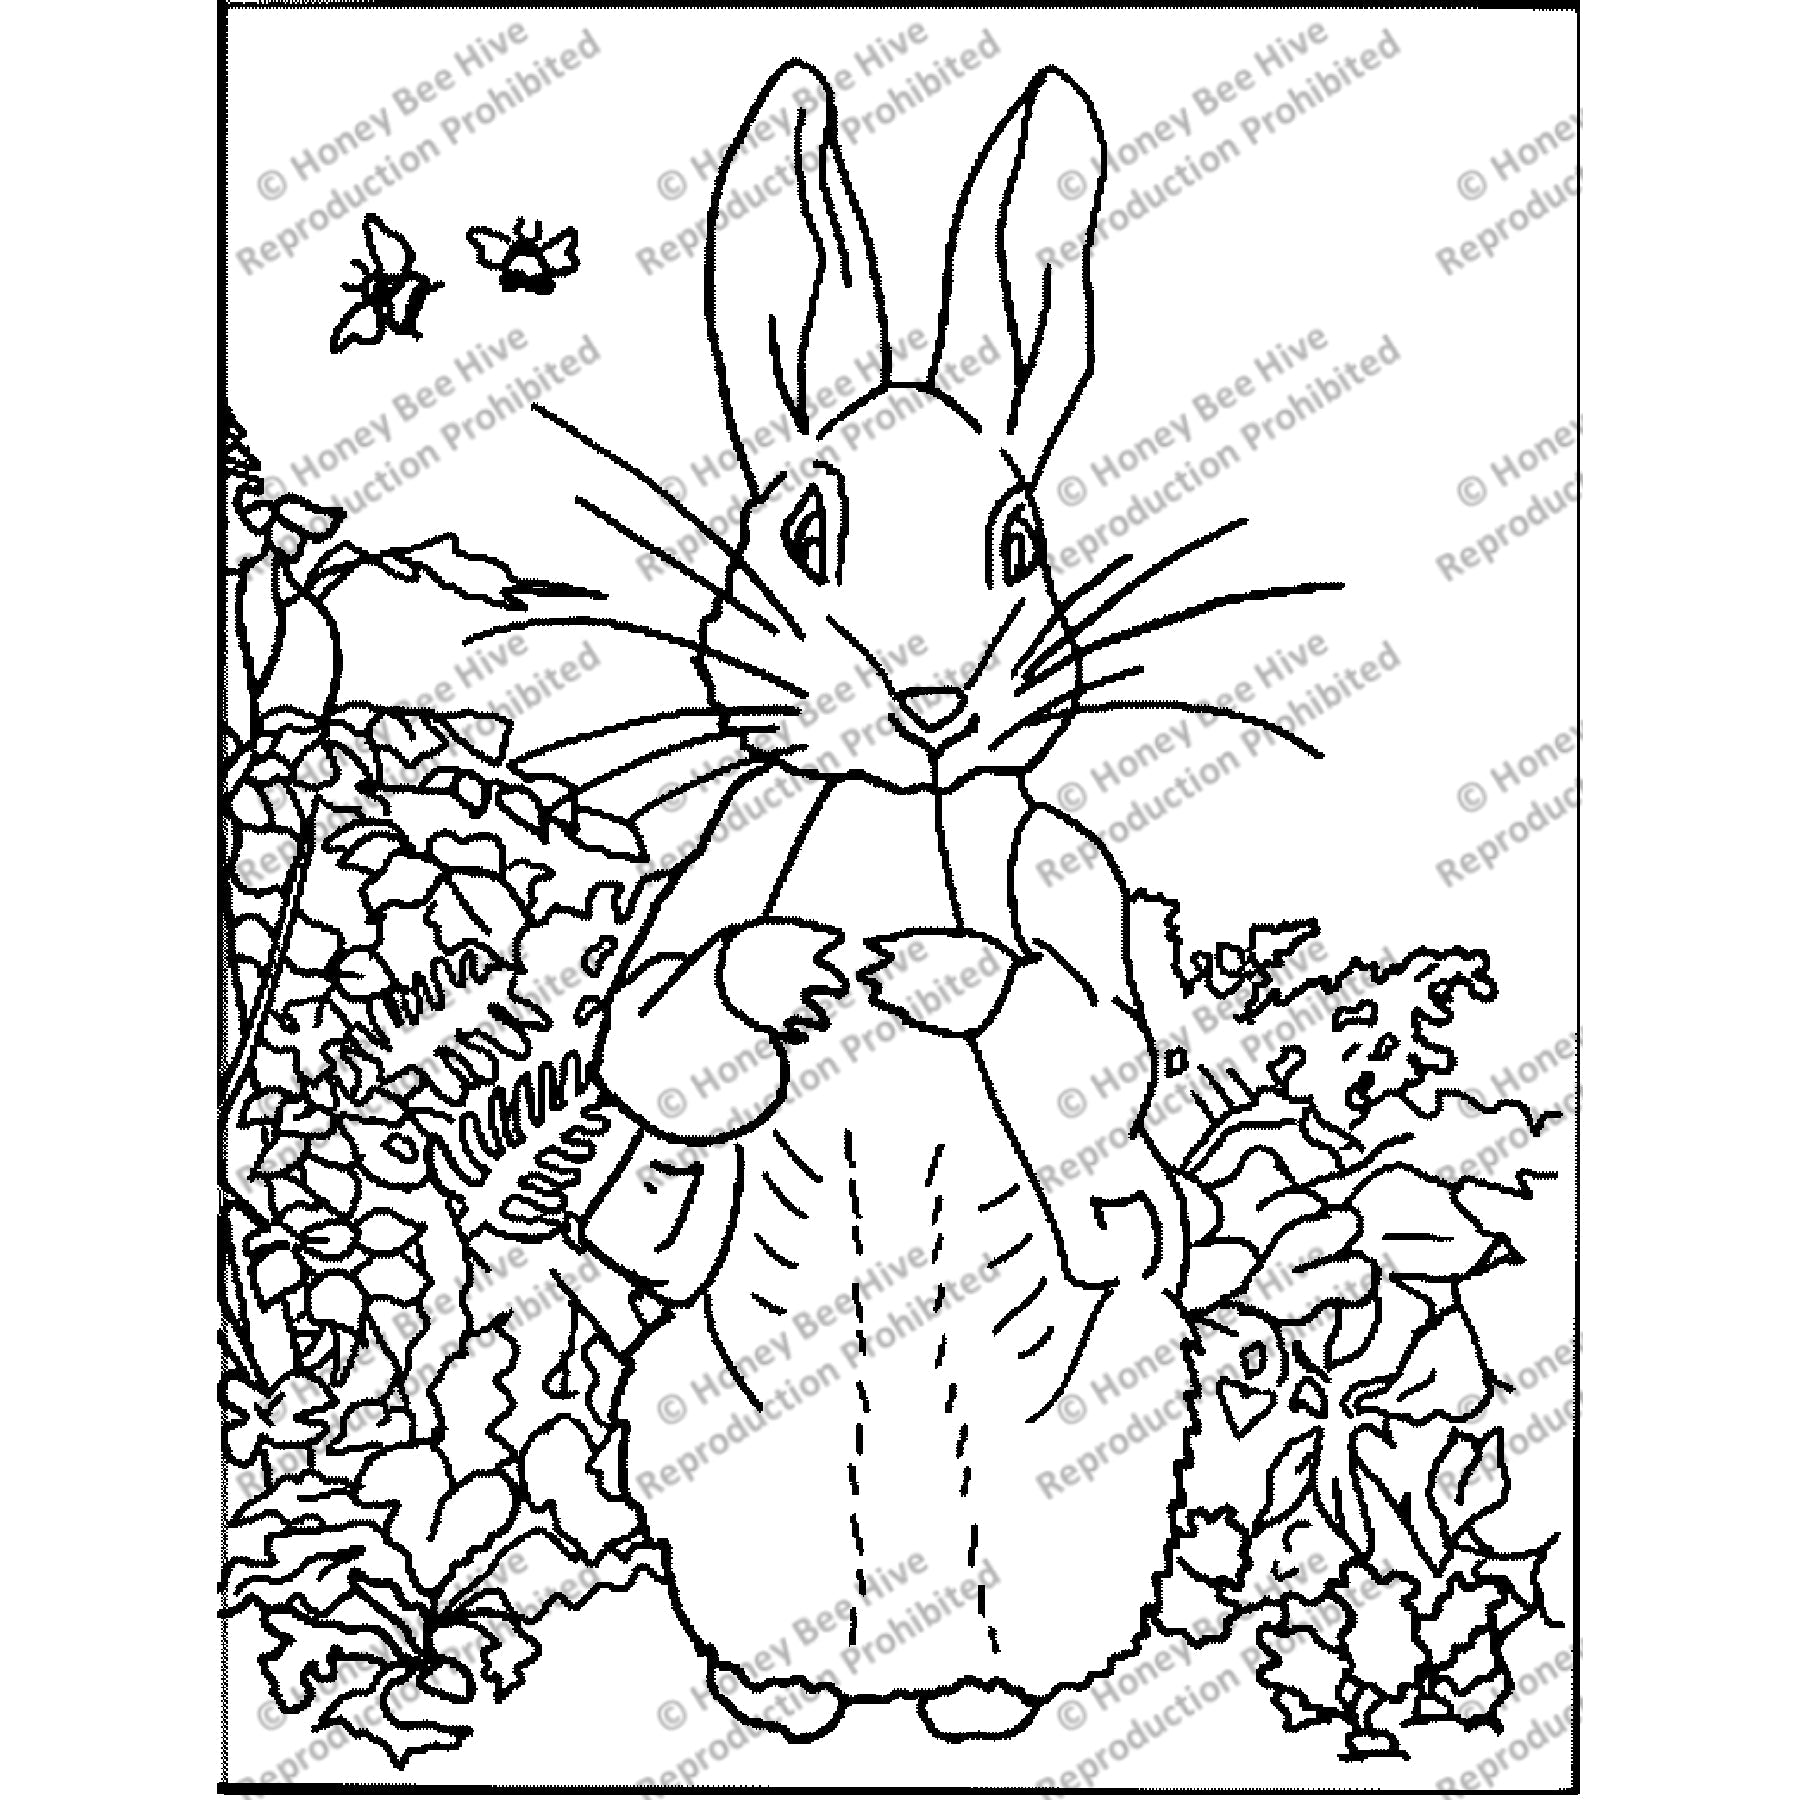 Peter Rabbit, ill. Beatrix Potter, 1902, rug hooking pattern